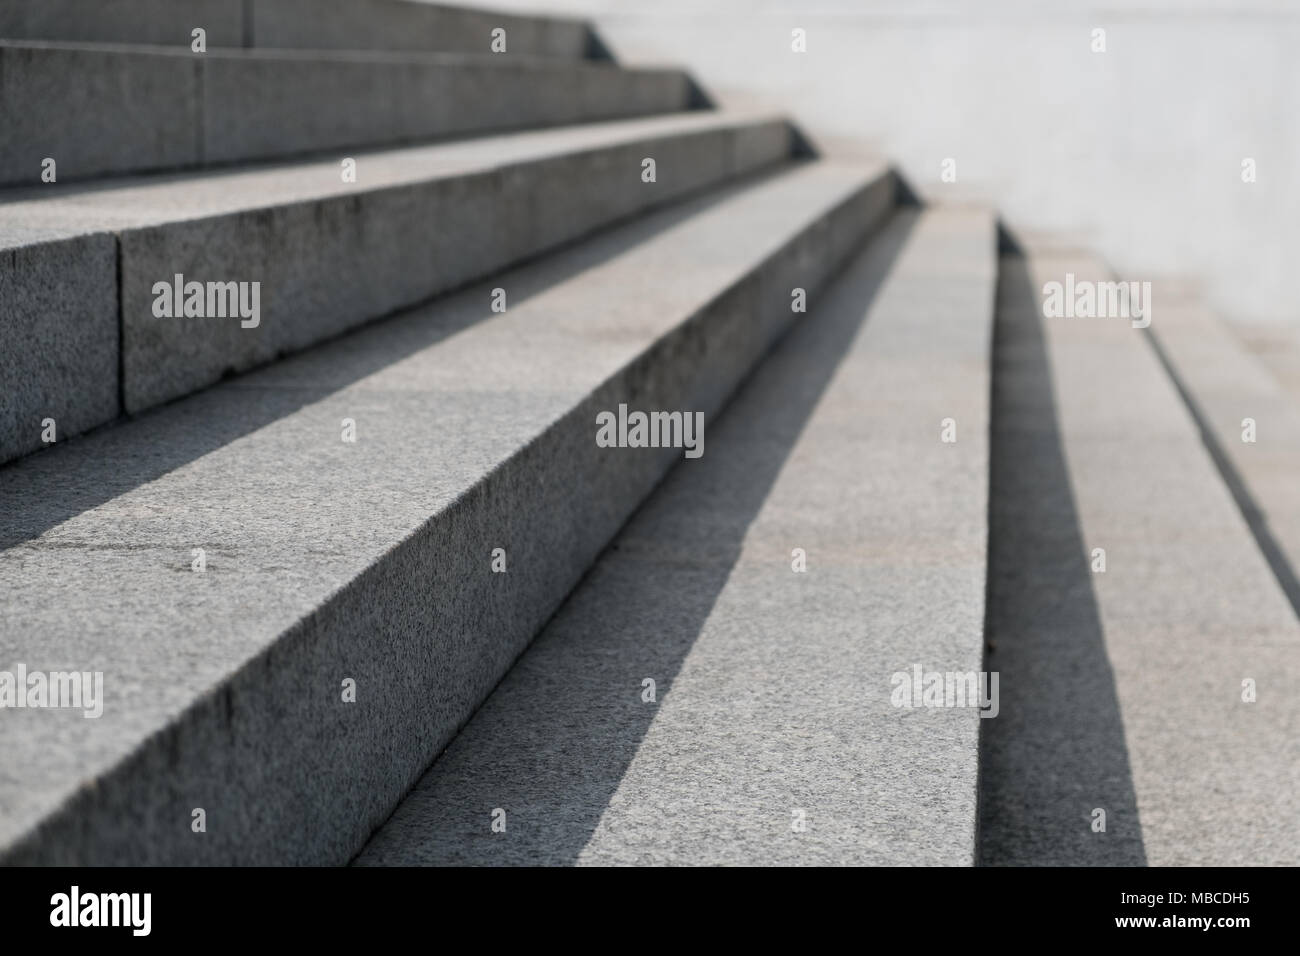 Treppen im Freien Nahaufnahme - treppe Detail - Schritte Detail - Stockfoto